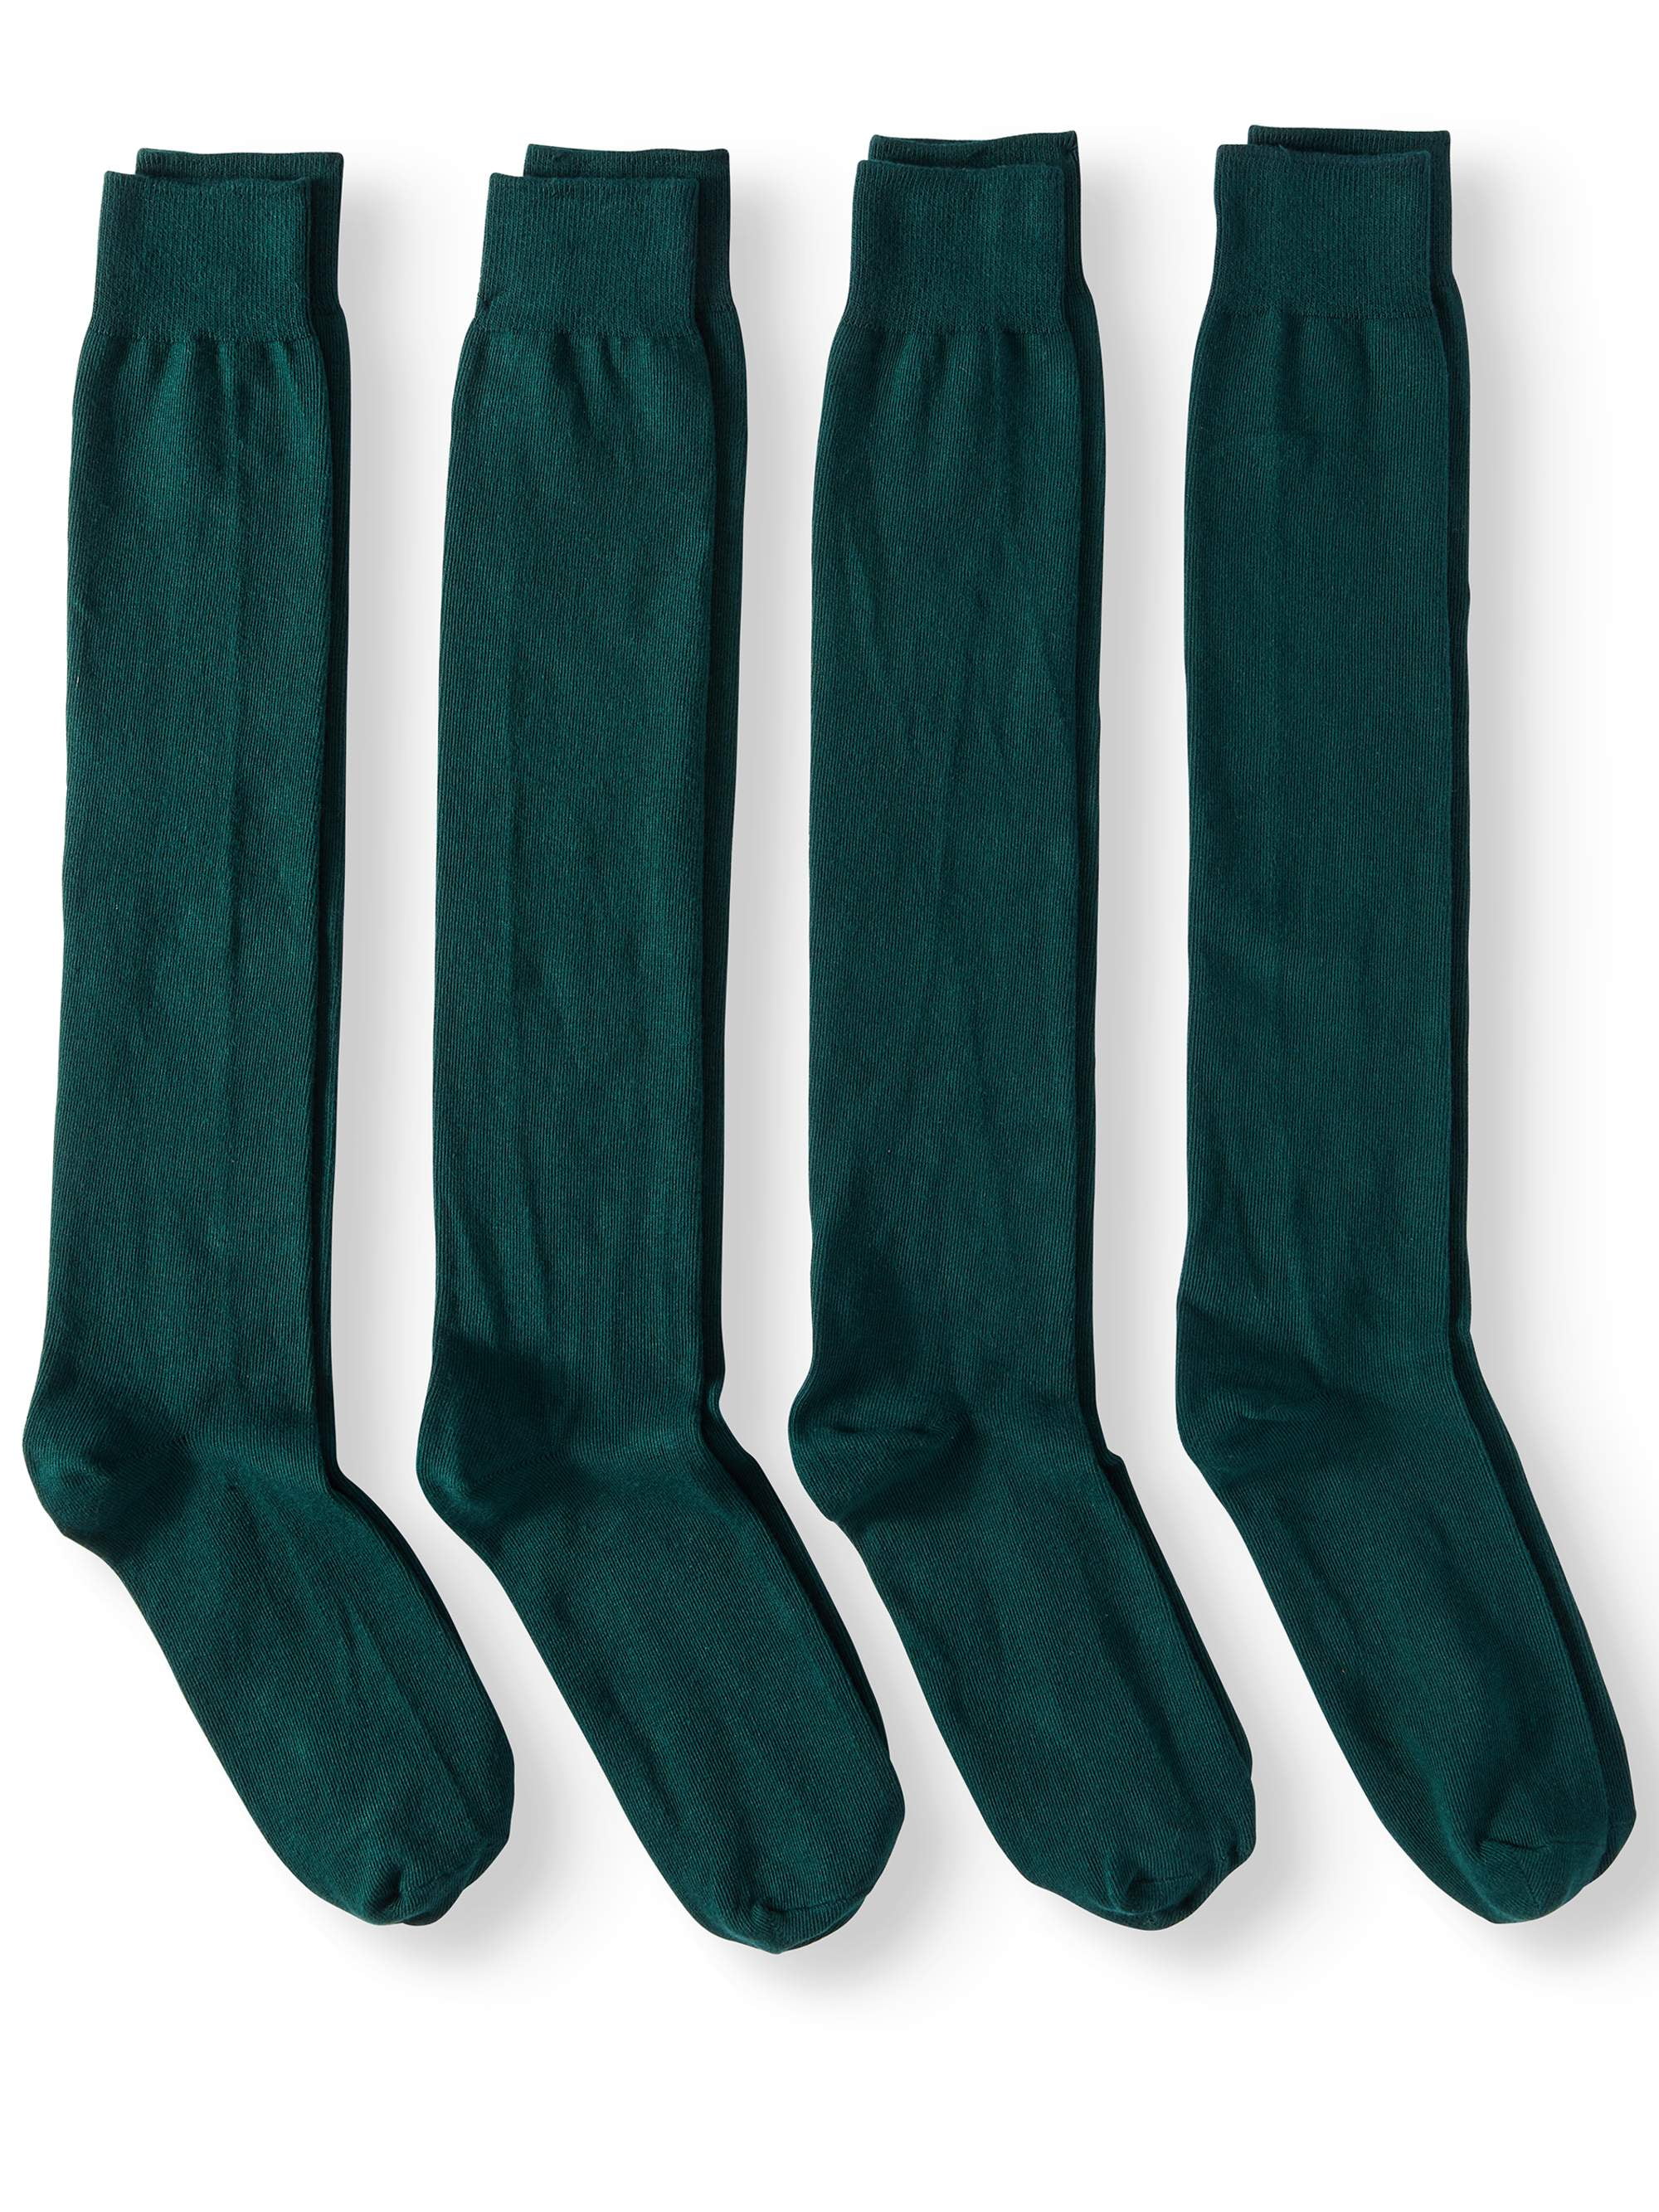 BANNER Girls Kids Knee High Socks Back to School Uniform 6Pairs Warm Cotton Rich 